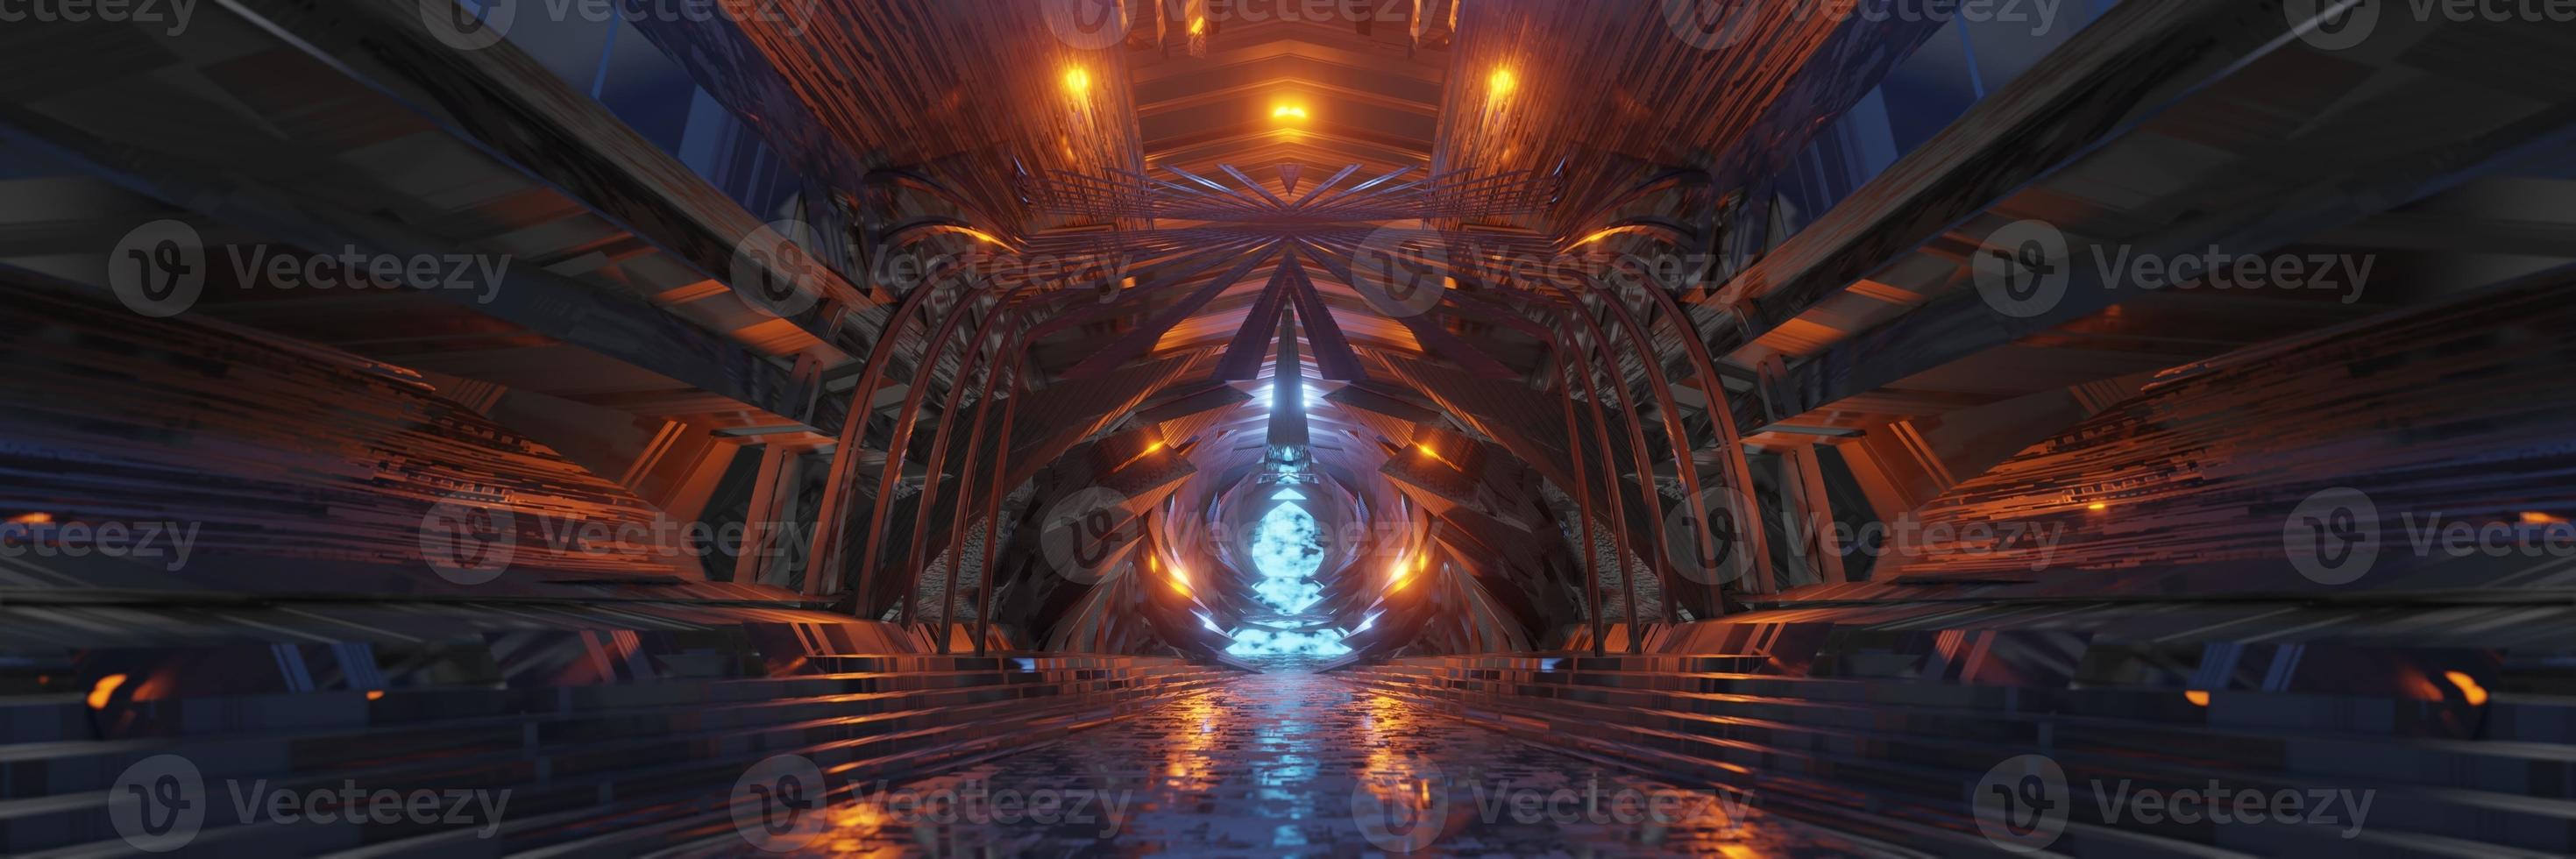 sci fi toekomst fantasie buitenaardse planeet grote zaal gebouw panorama achtergrond 3D-rendering foto